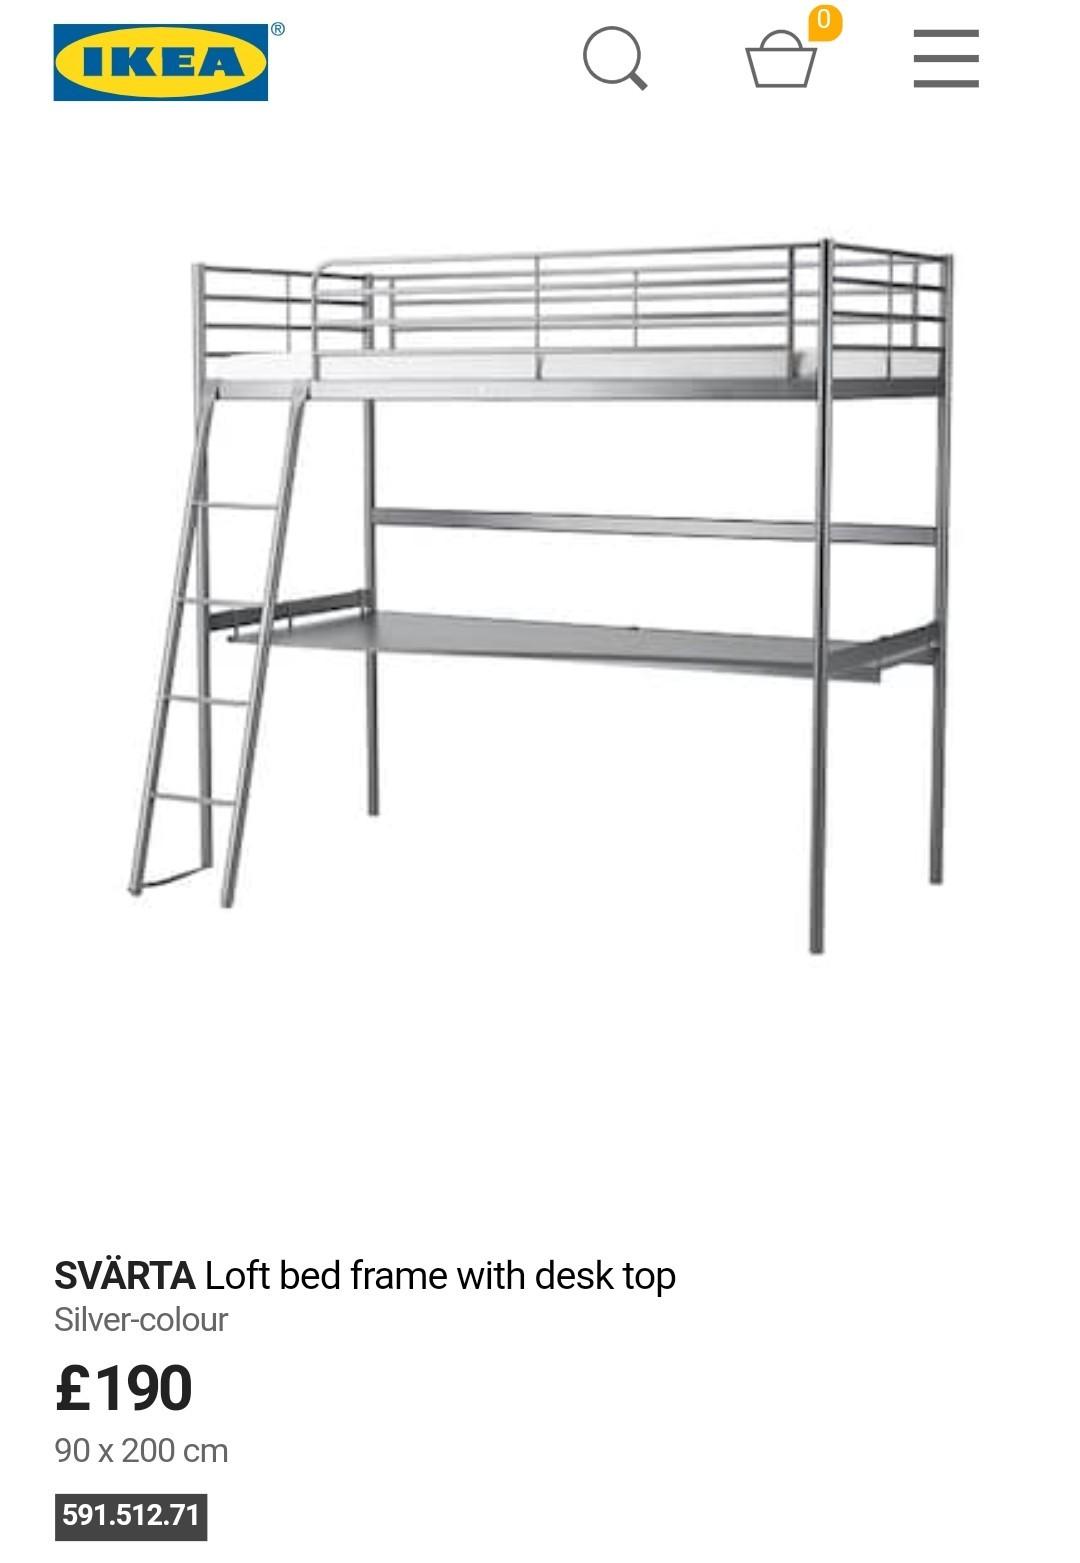 Ikea Svarta Loft Bed Desk Top In Bn17, Ikea Svarta Bunk Bed Parts